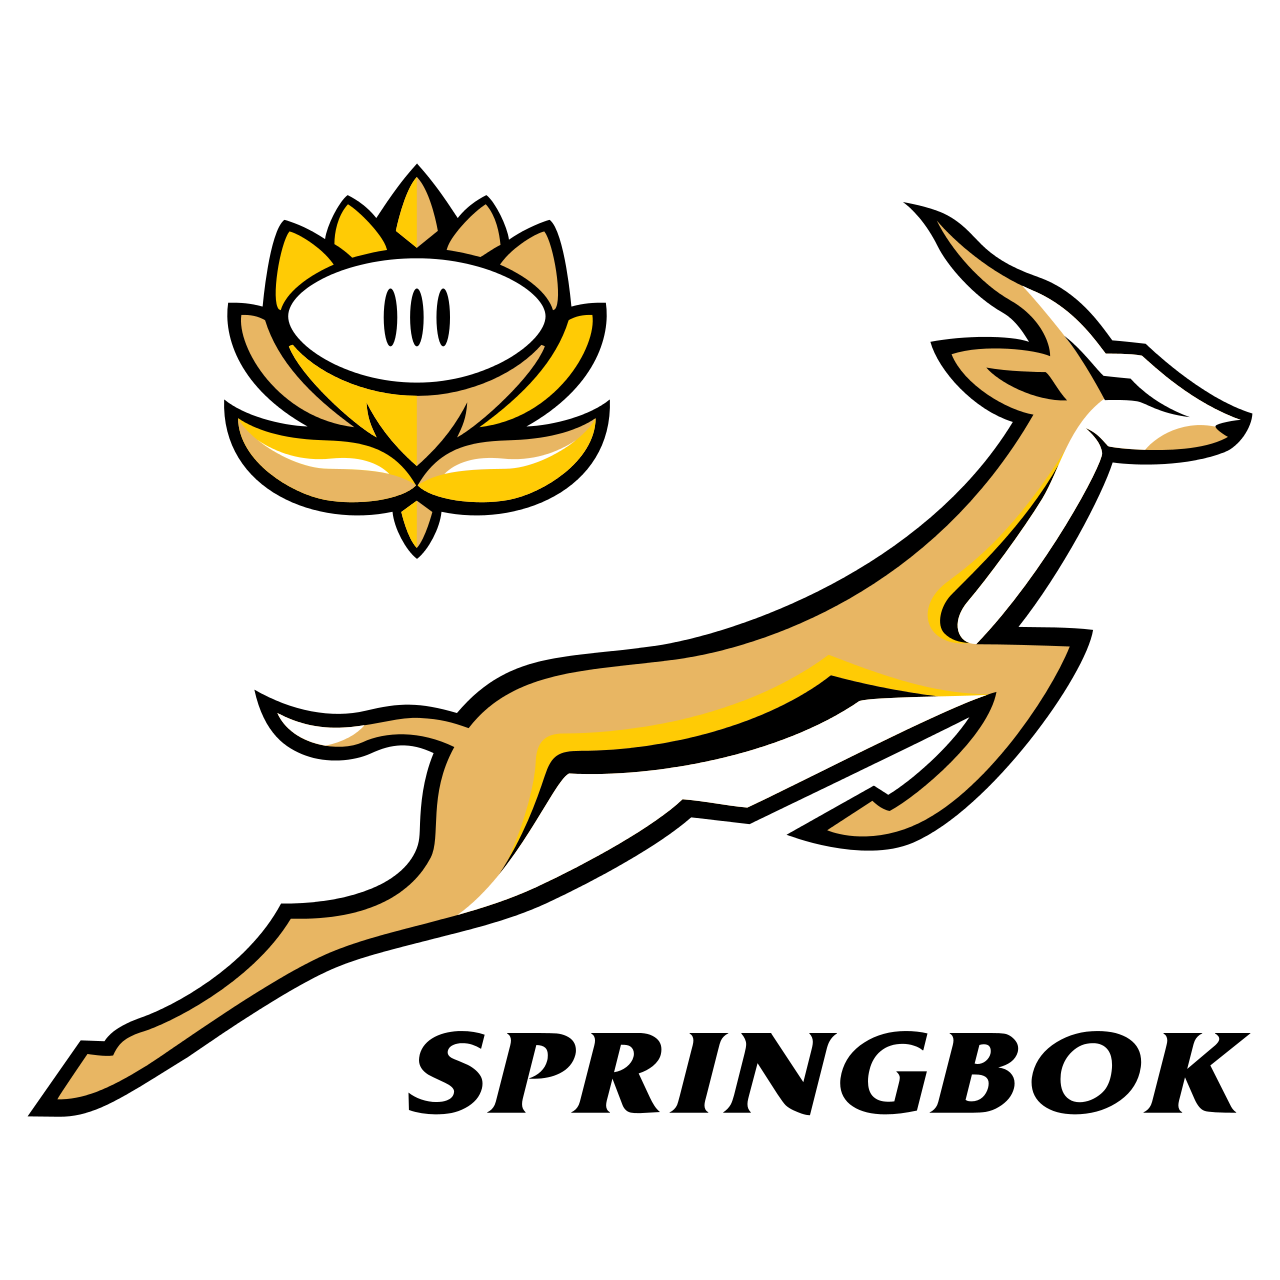 South Africa Springboks